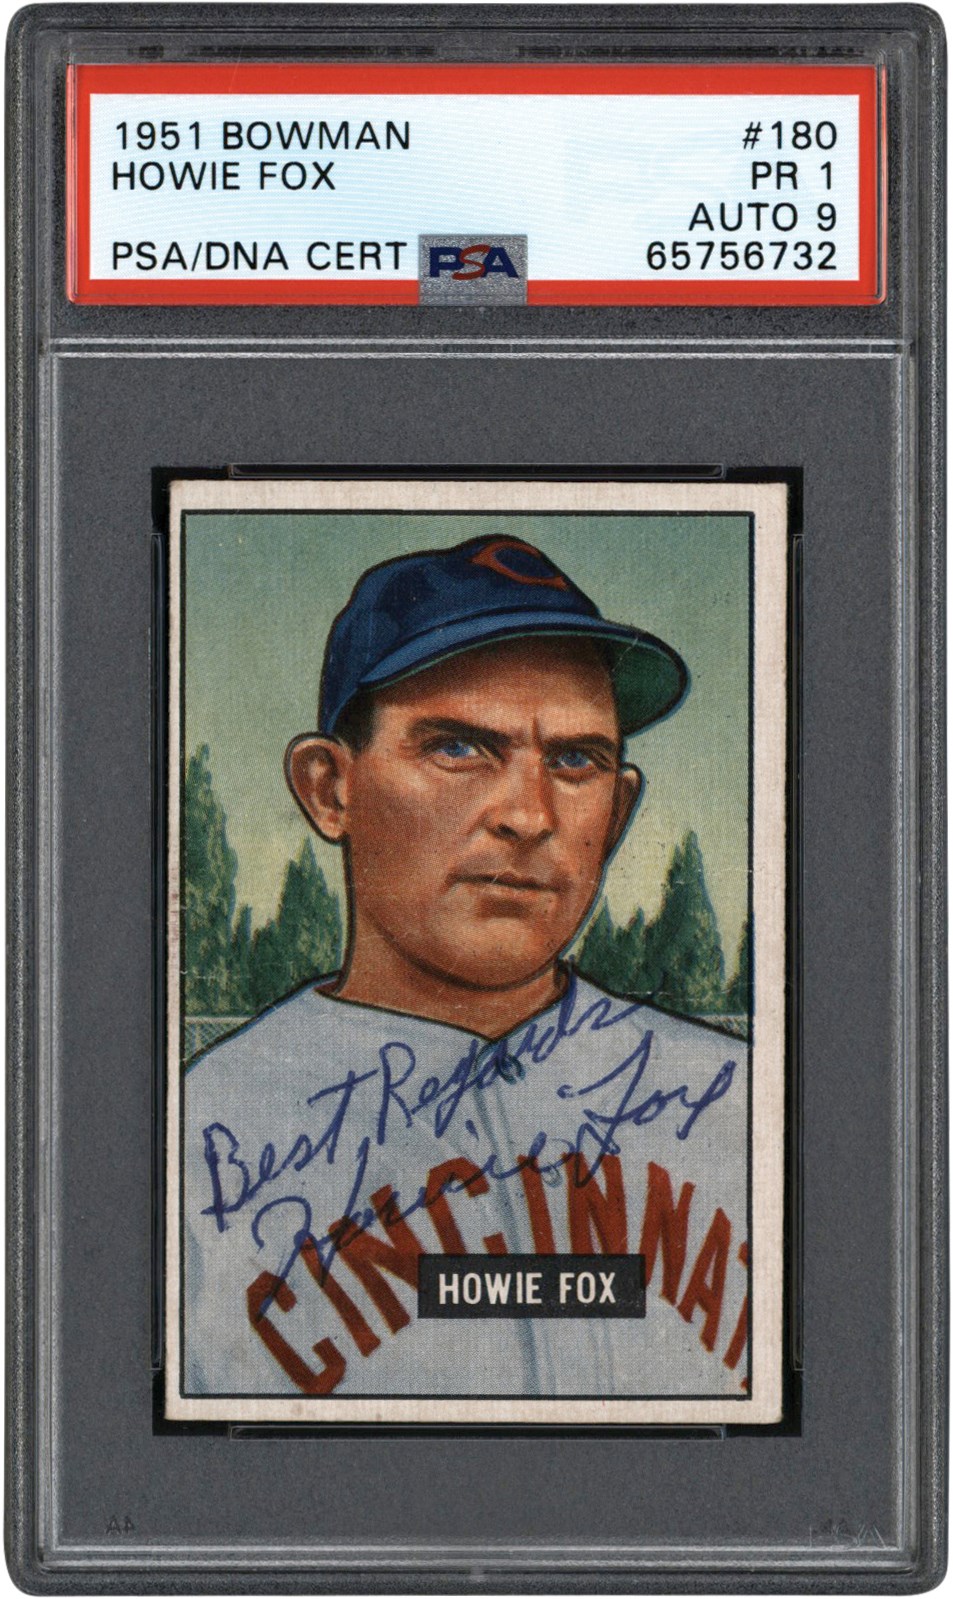 - 1951 Bowman Baseball #180 Howie Fox Autograph Card PSA PR 1 Auto 9